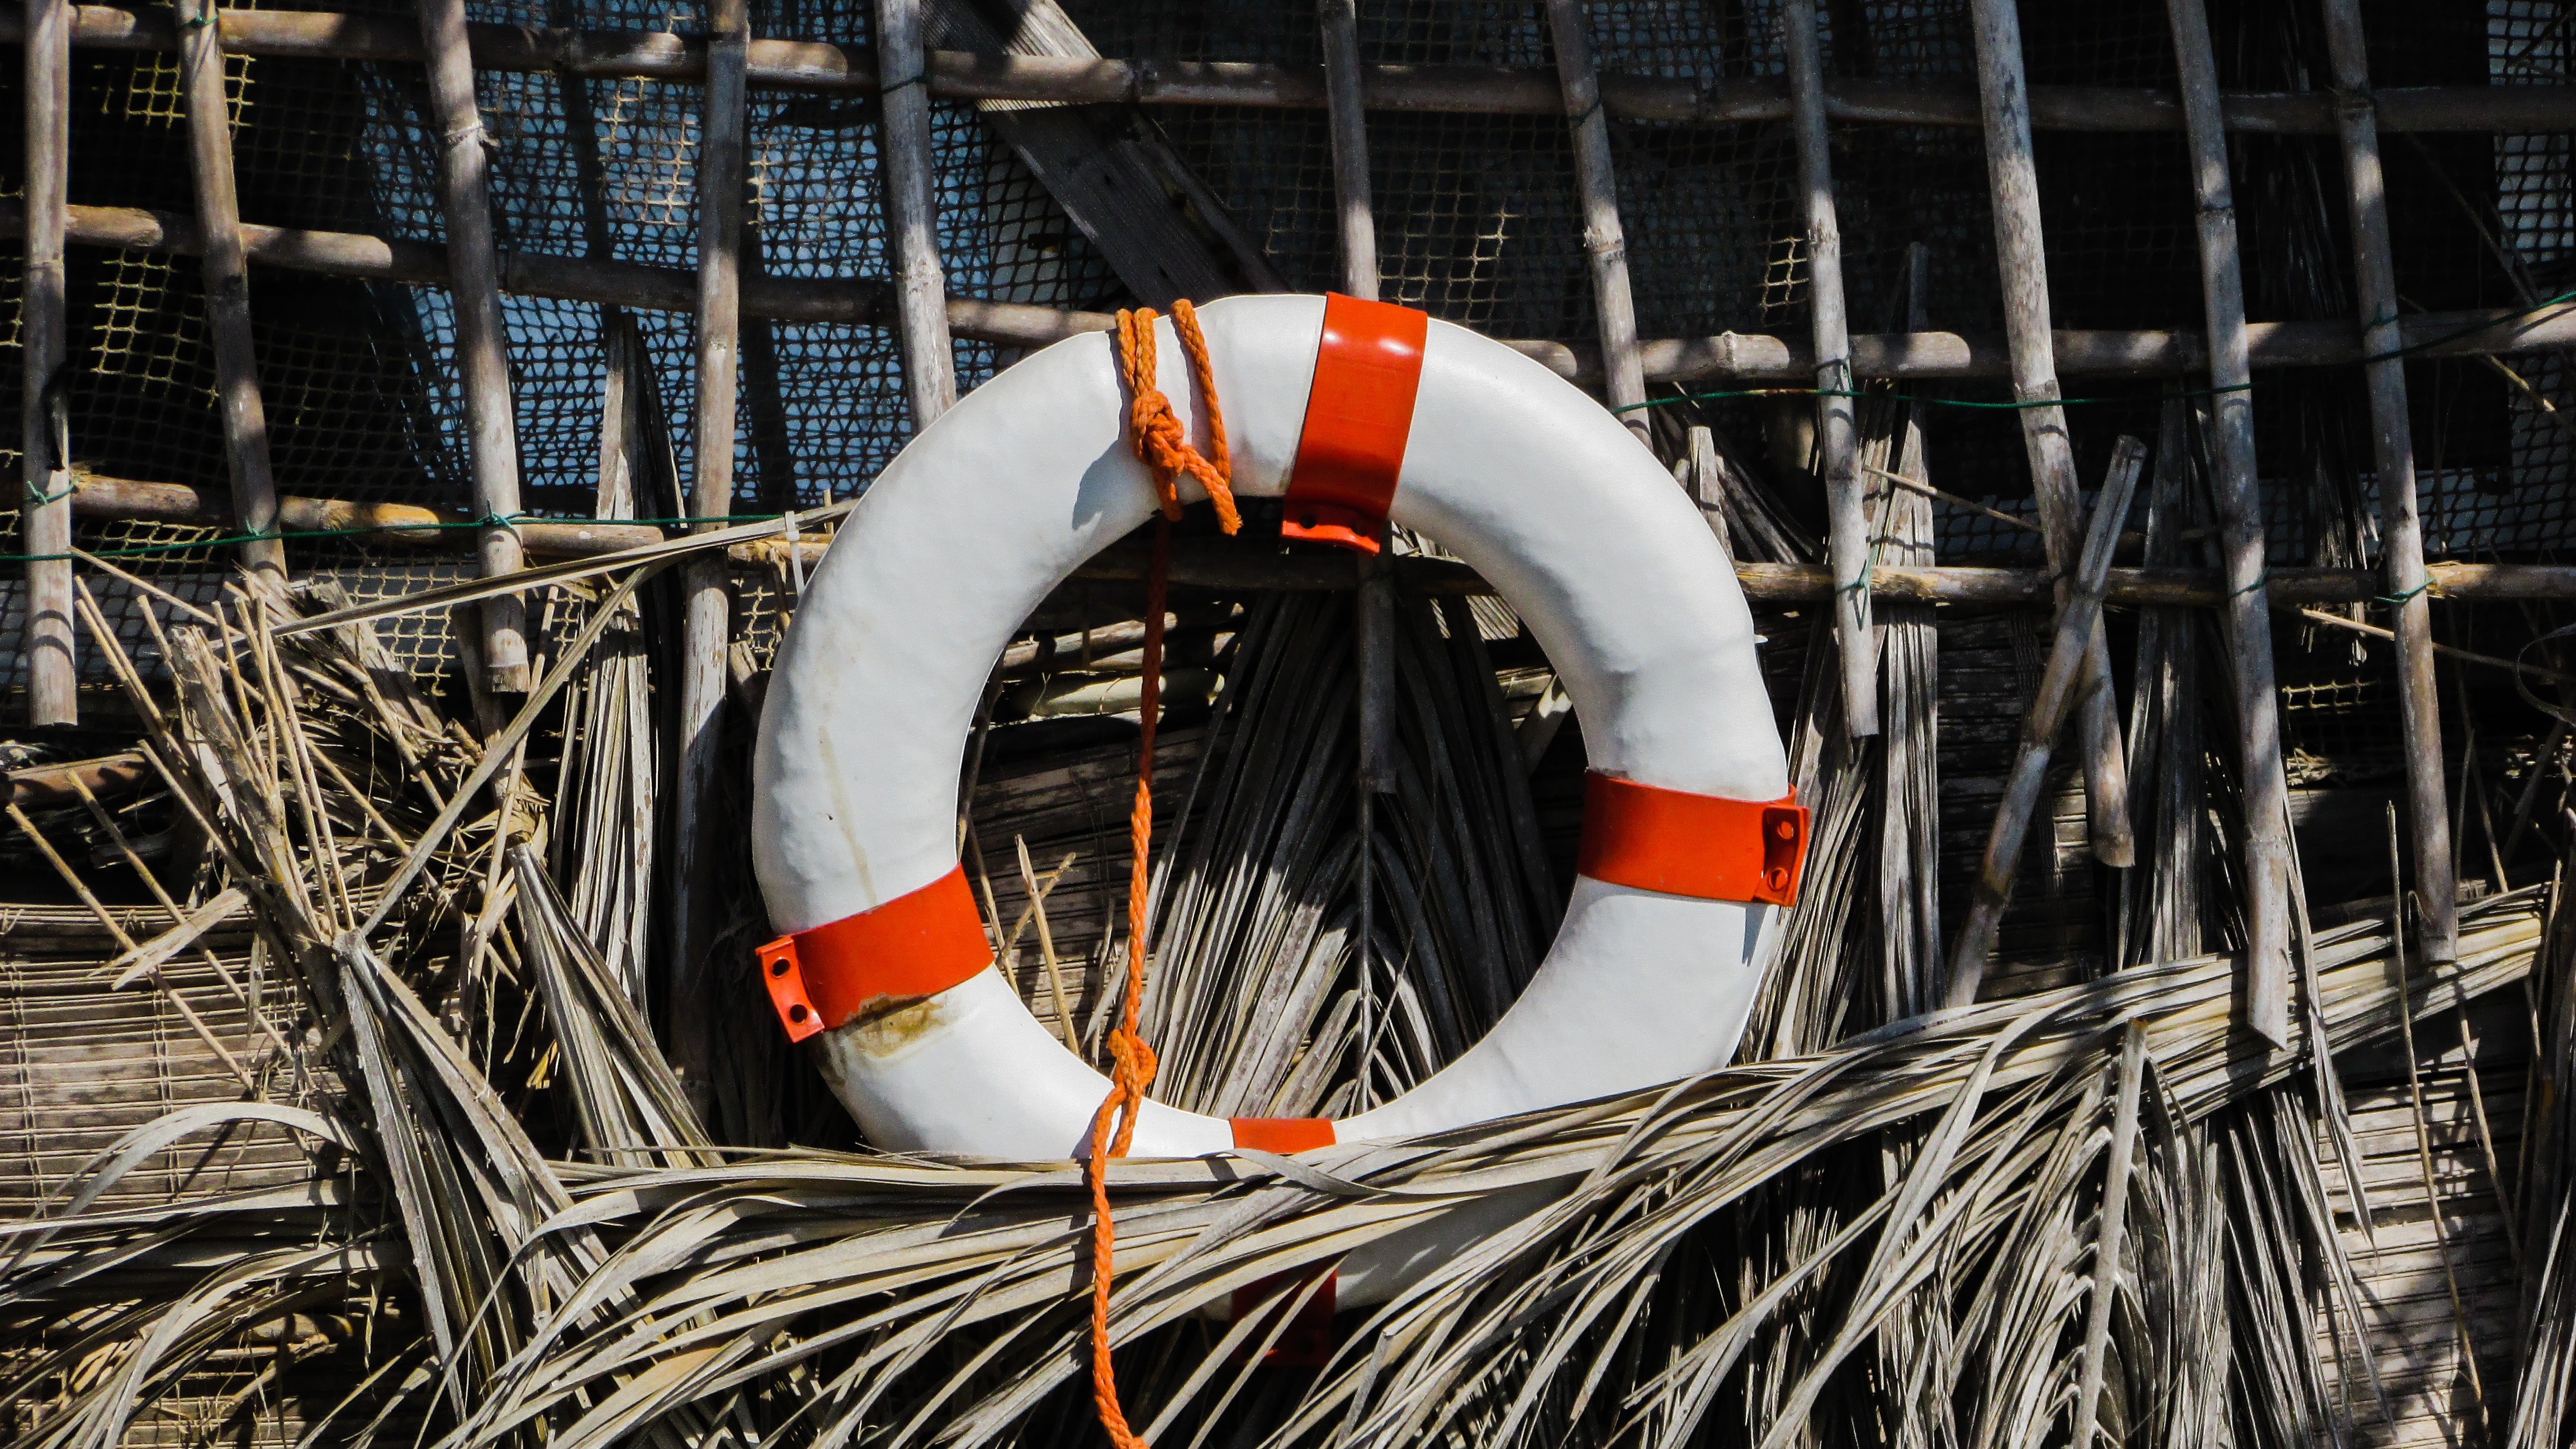 miscellanea, miscellaneous, reeds, equipment, lifebuoy, life buoy